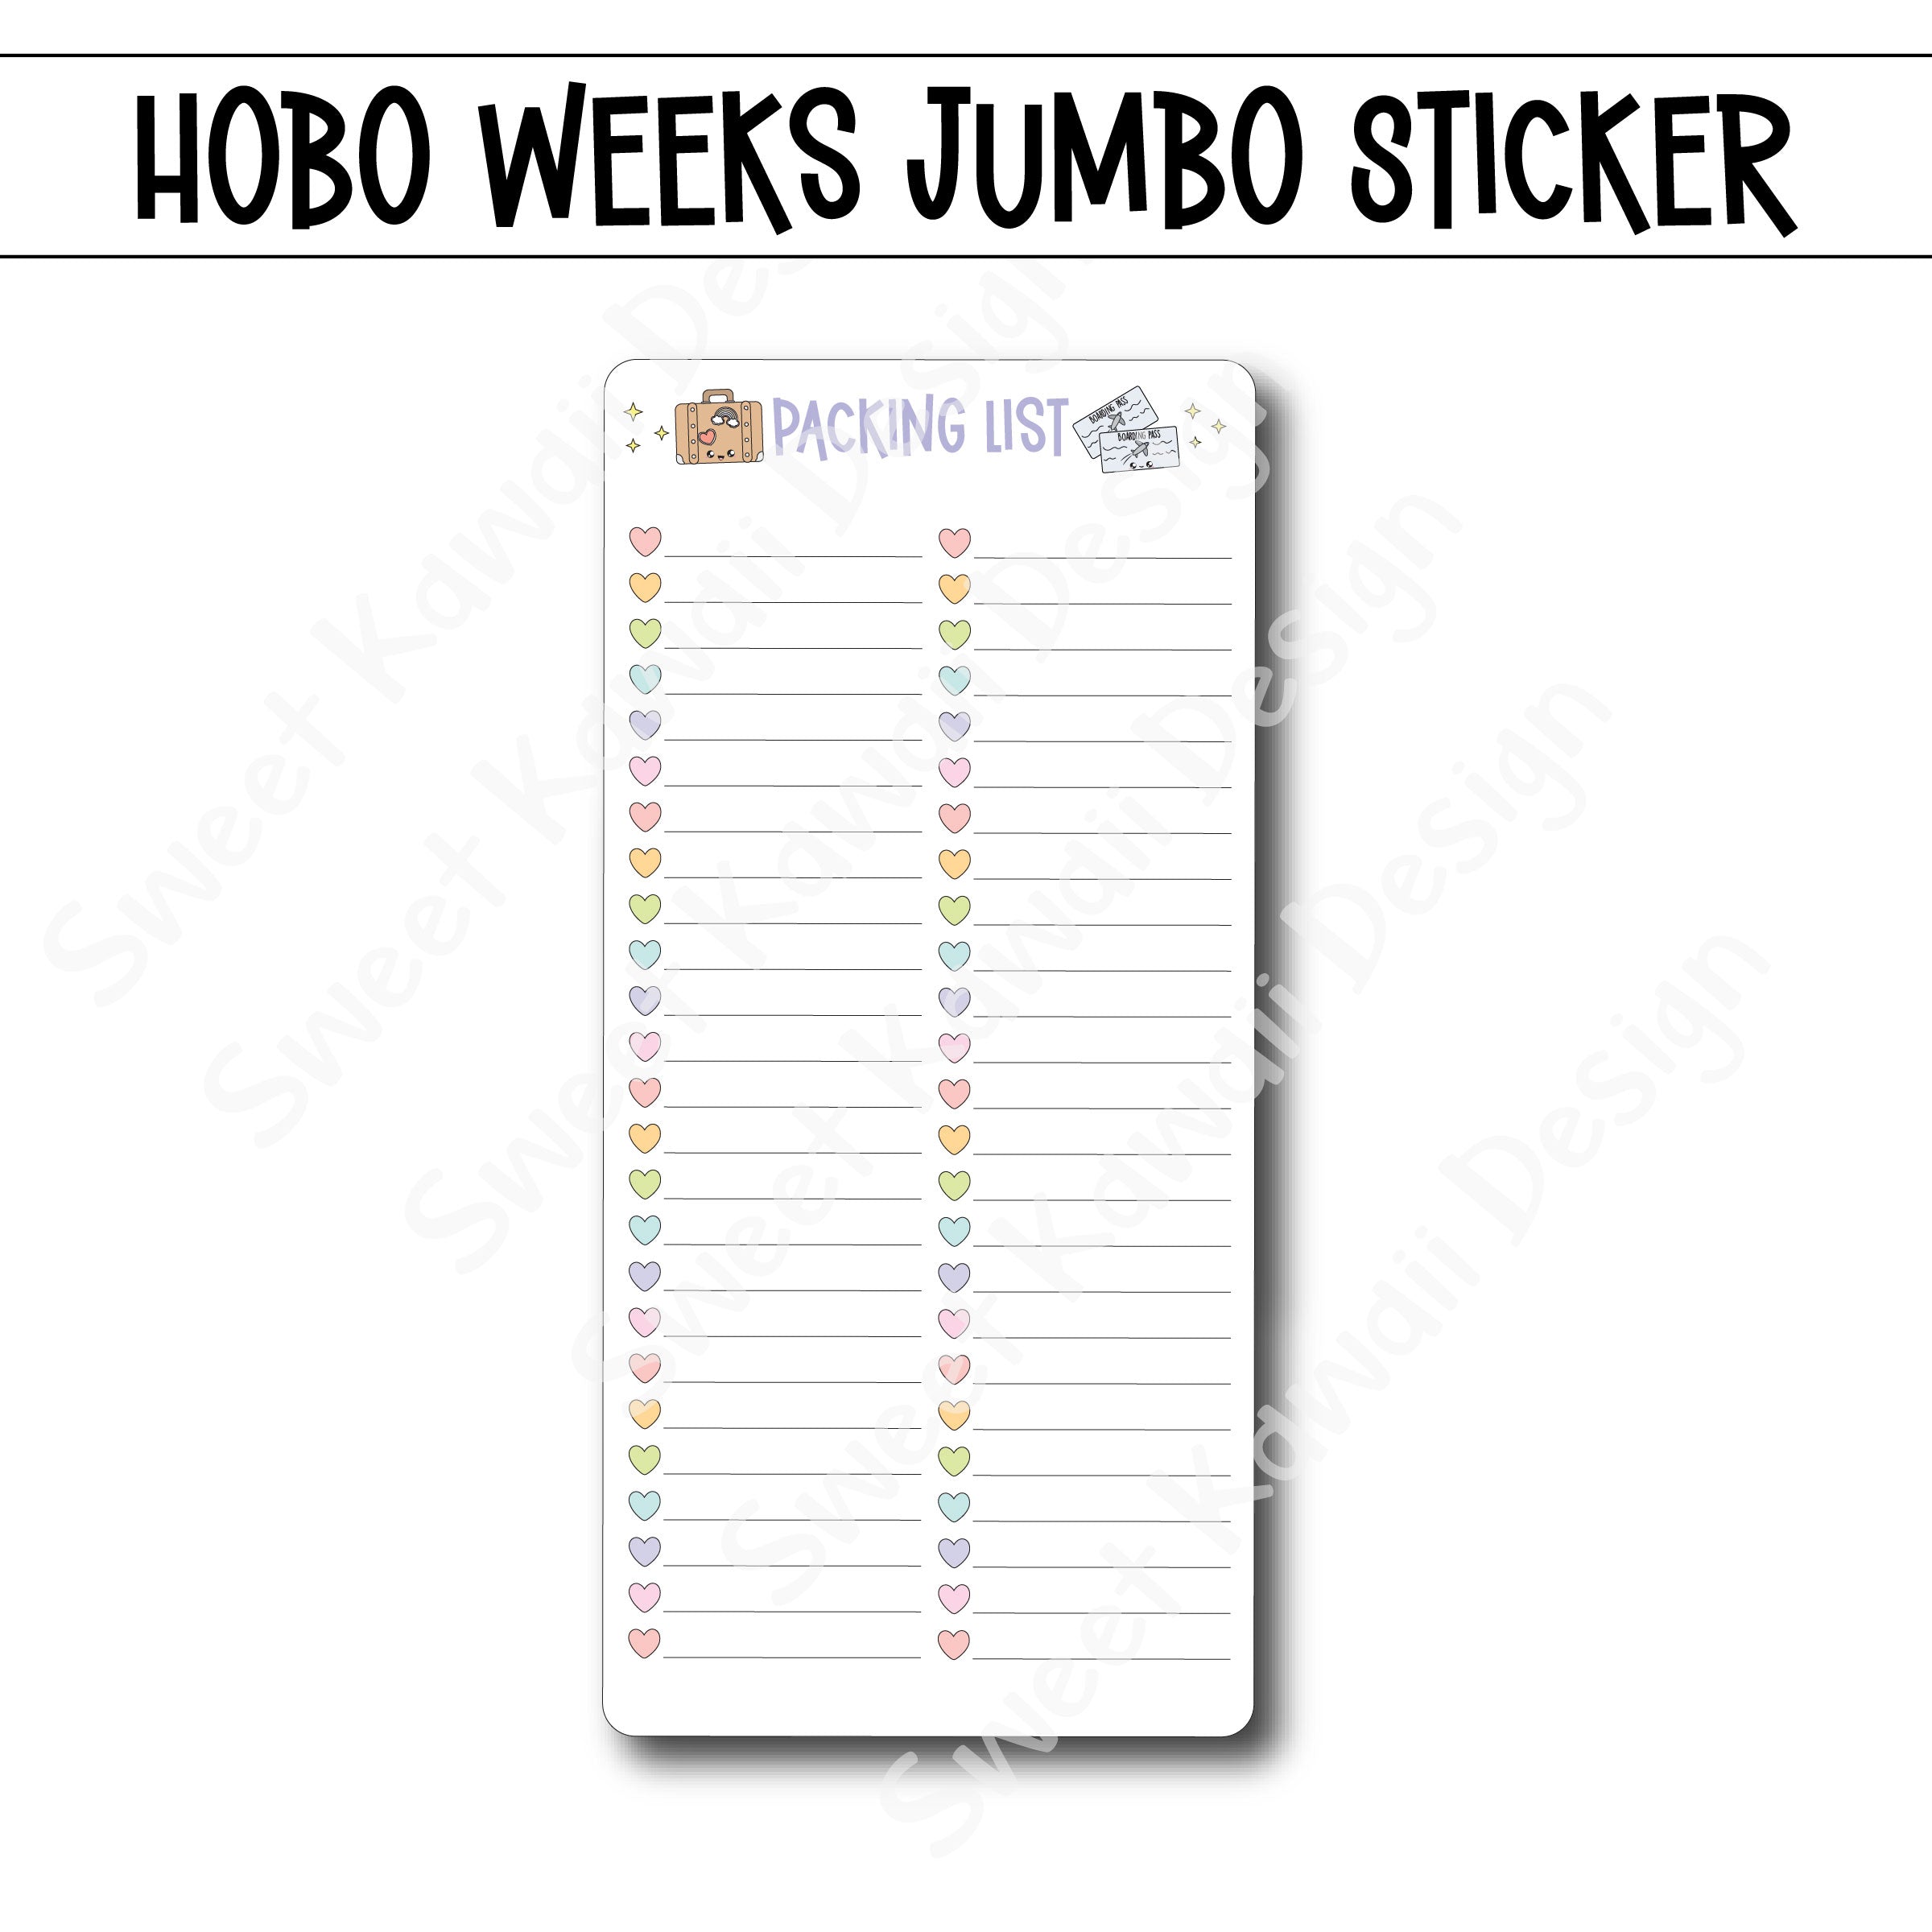 Kawaii Jumbo Sticker - Packing List - Size Options Available